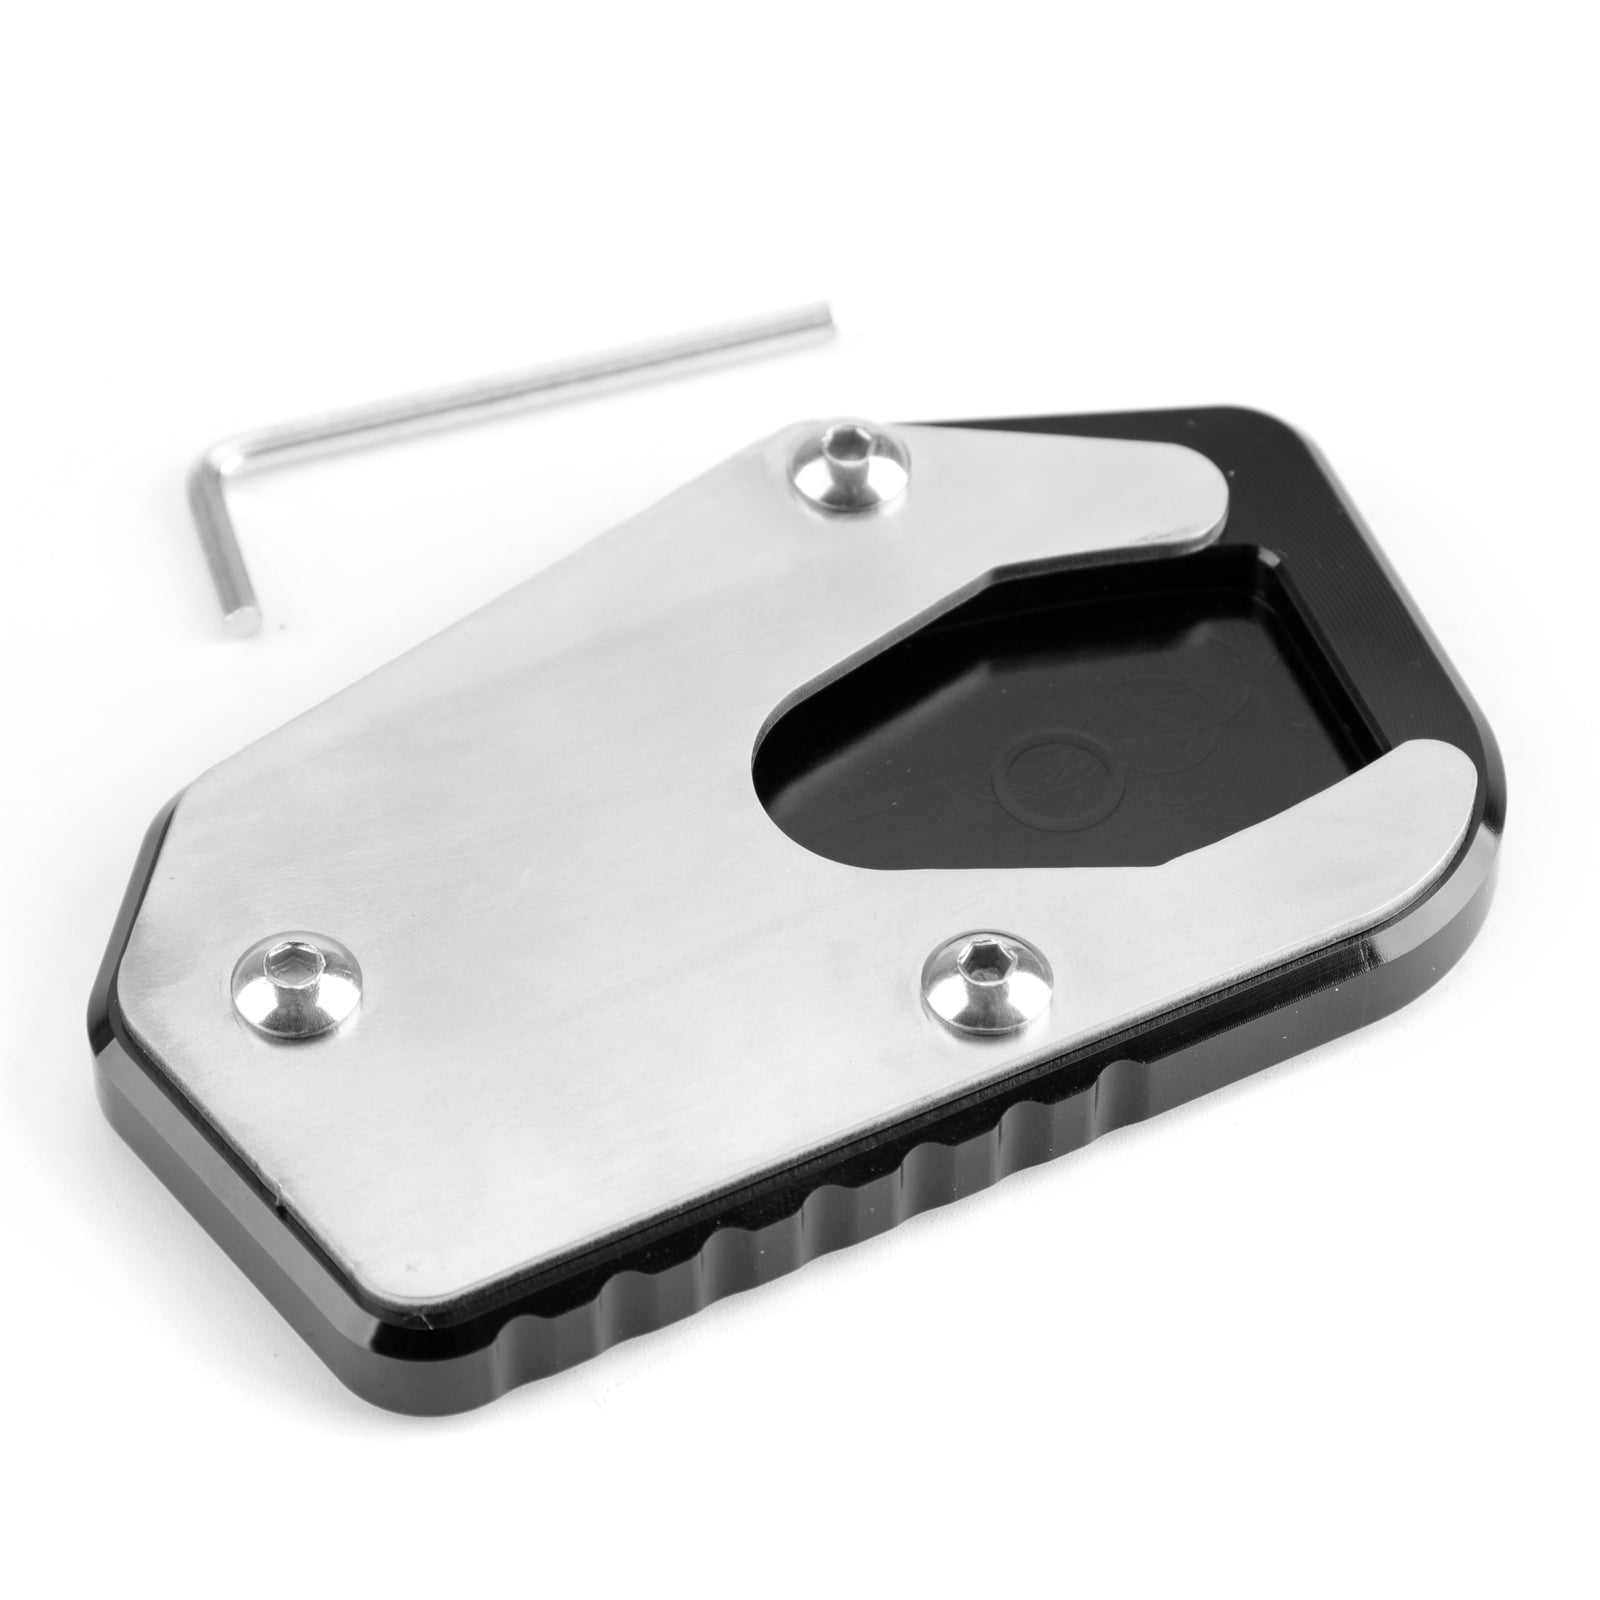 Sidestand Plate Kickstand Extension Pad For SUZUKI V-STROM1000/DL1000 14-17